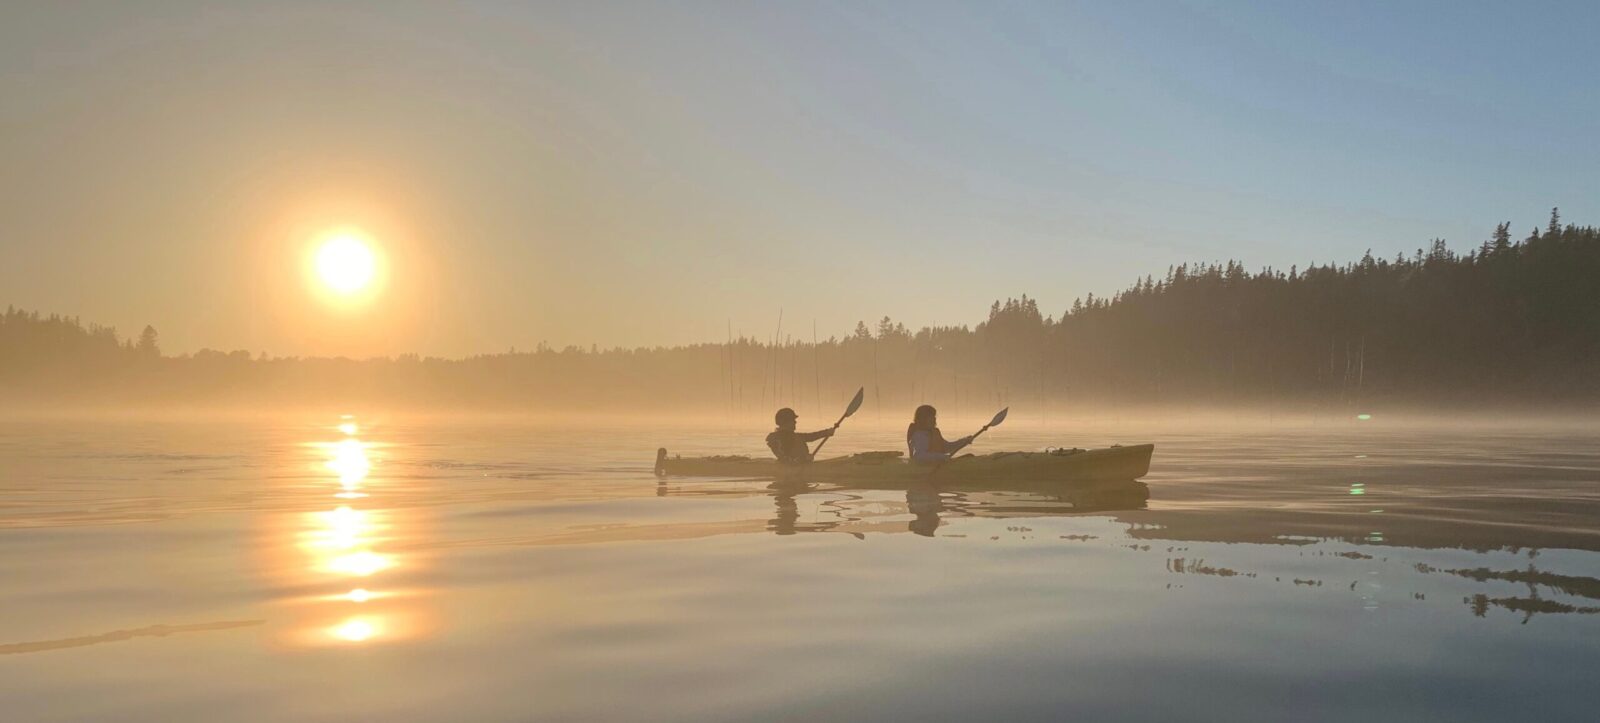 Two people paddling a canoe on a lake at sunrise.